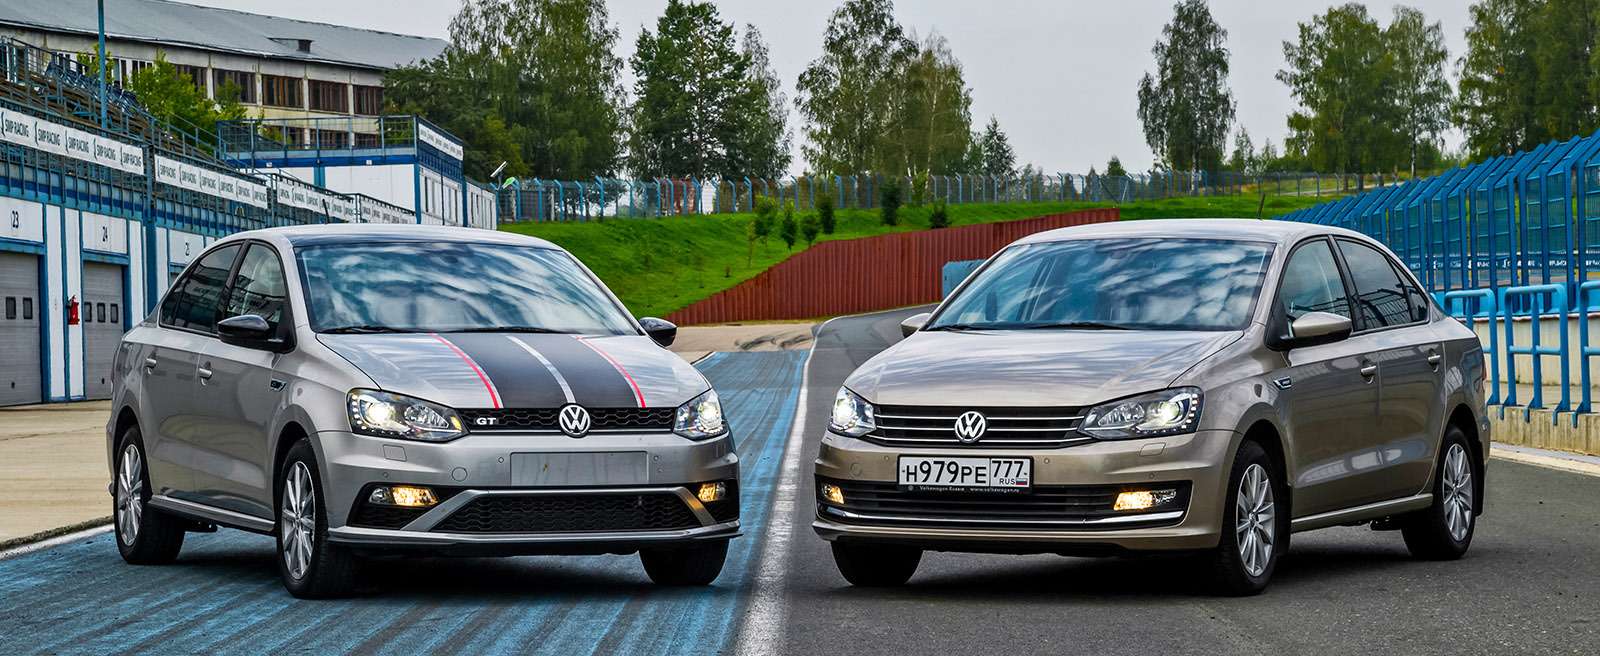 VW Polo GT против конкурентов: тест на «Смоленском кольце» — фото 644238